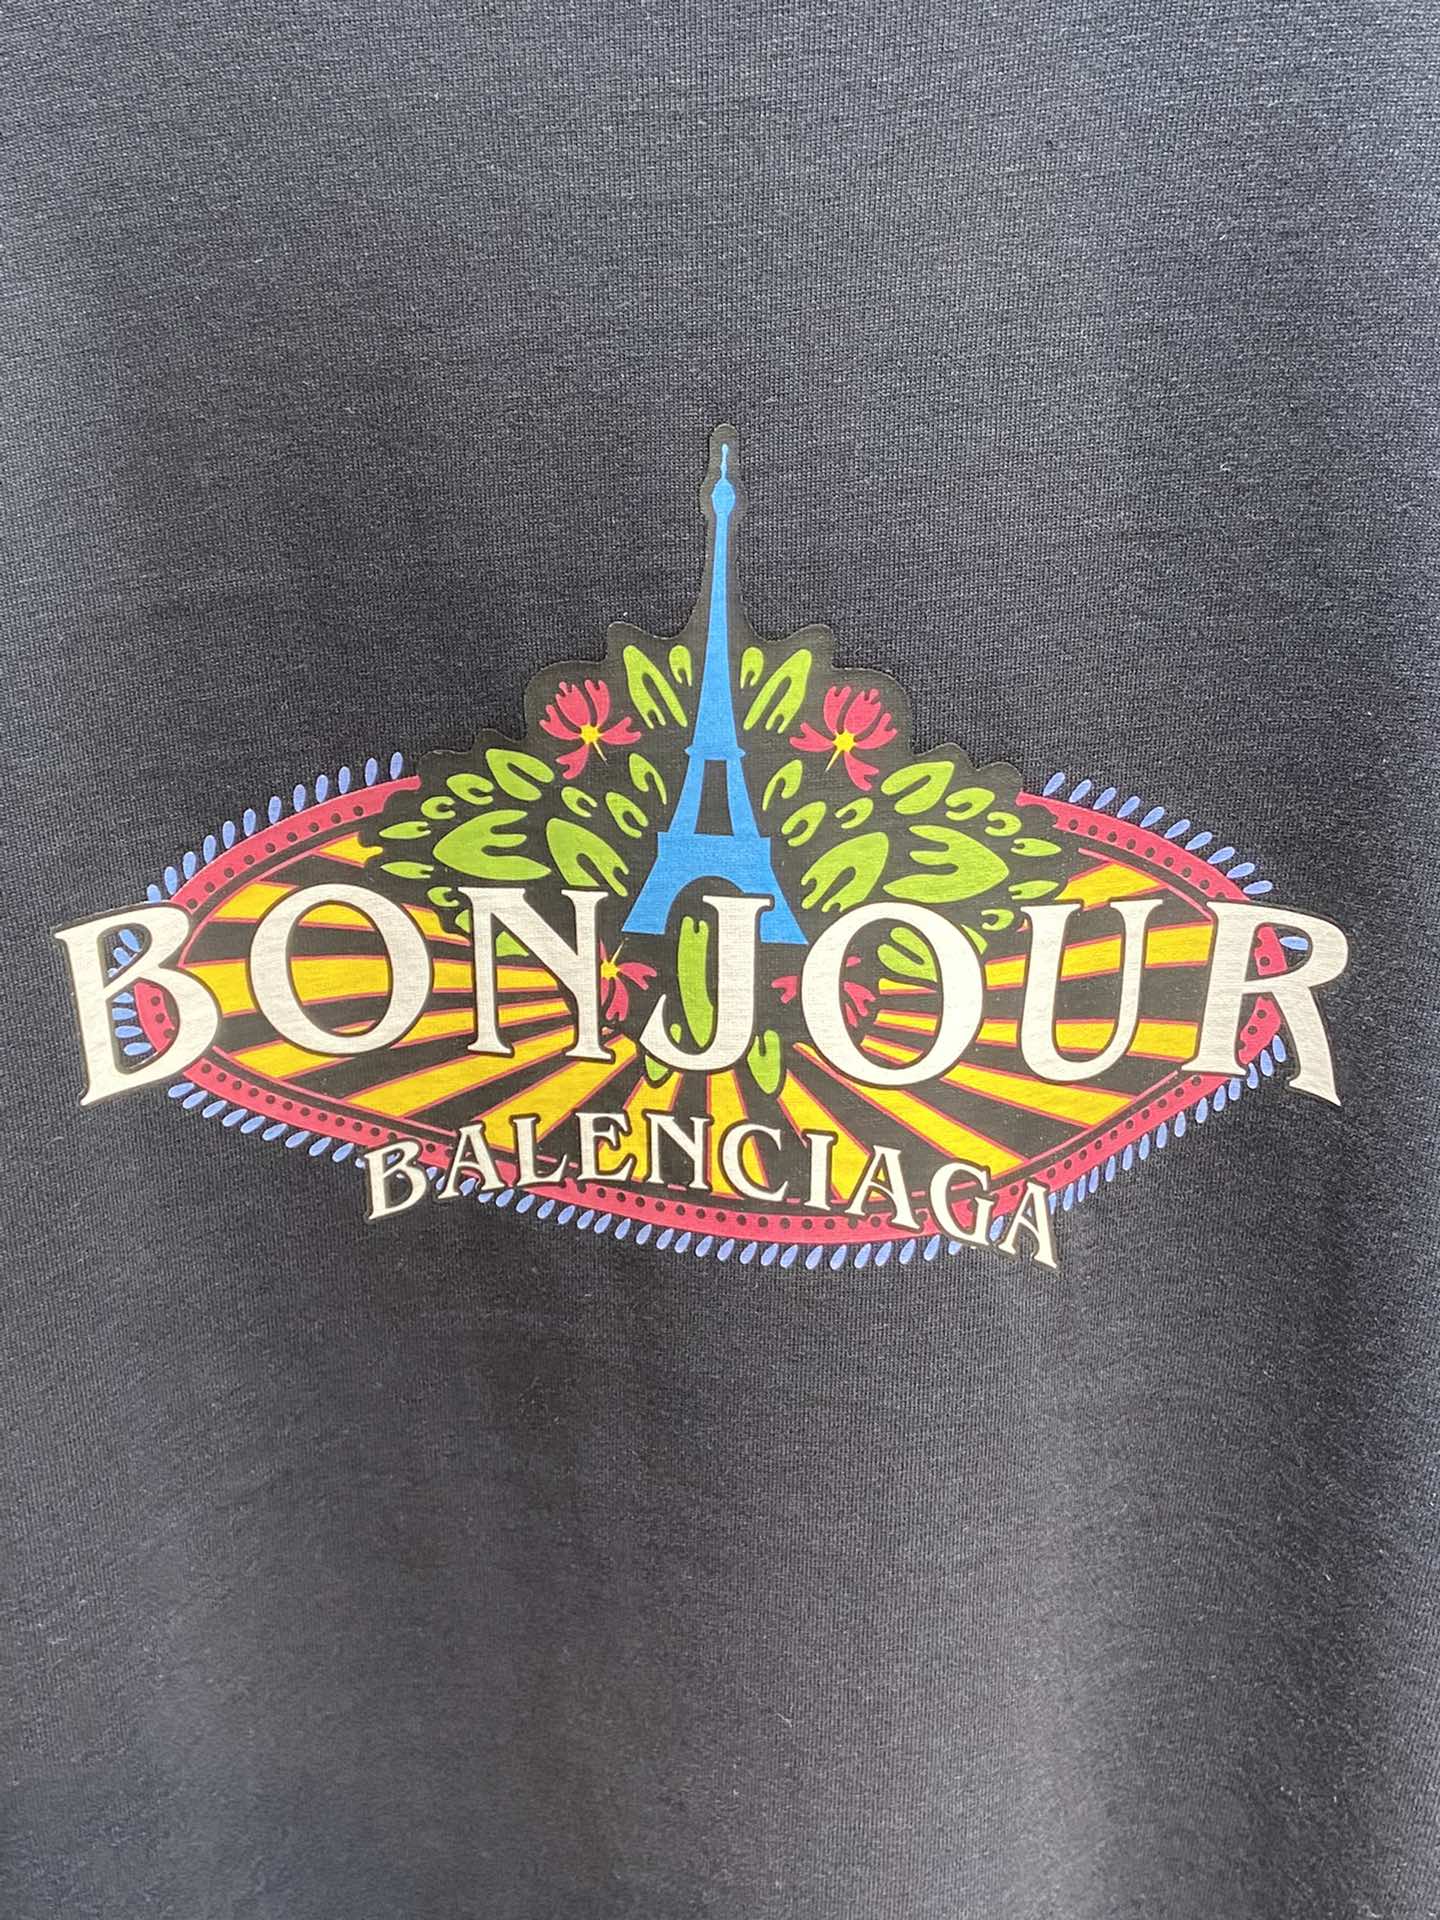 Balenciaga T-Shirt Bonjour in Black